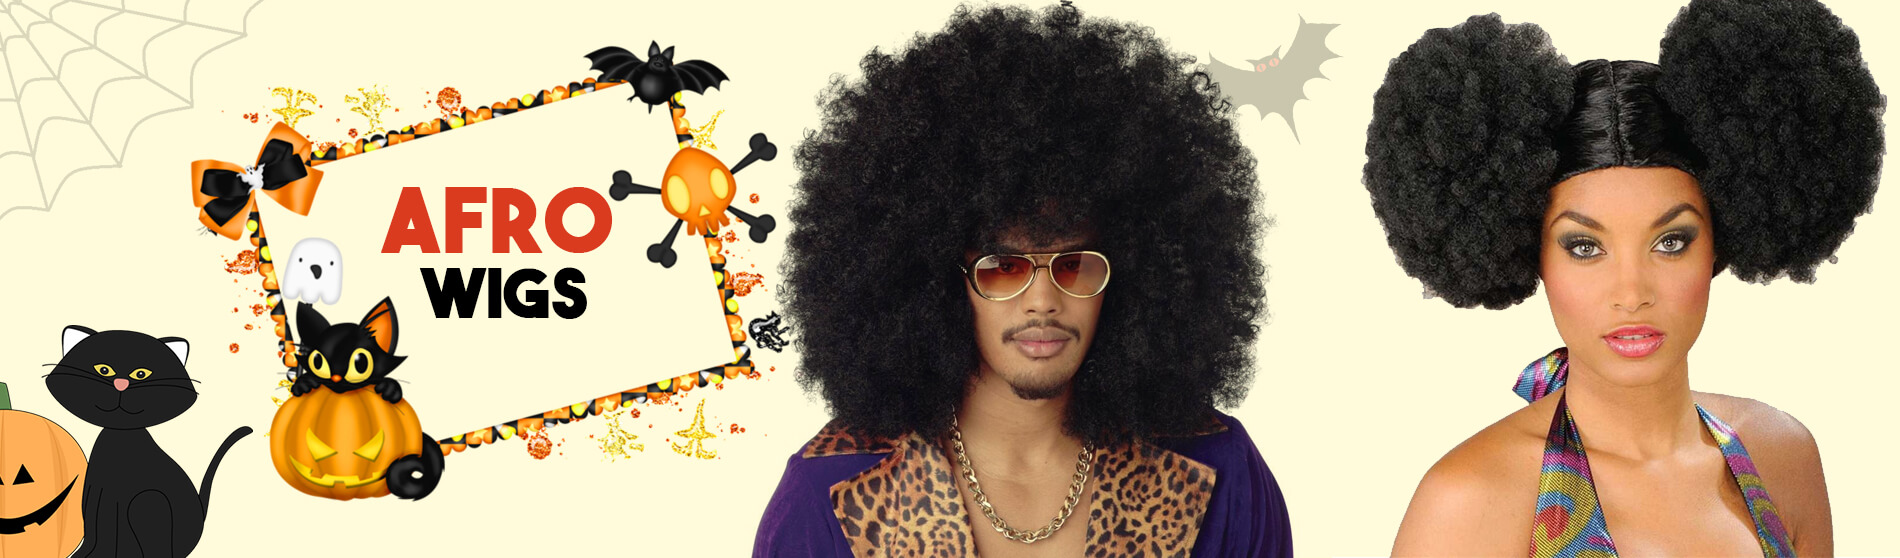 Glendale Halloween : Afro-Wigs